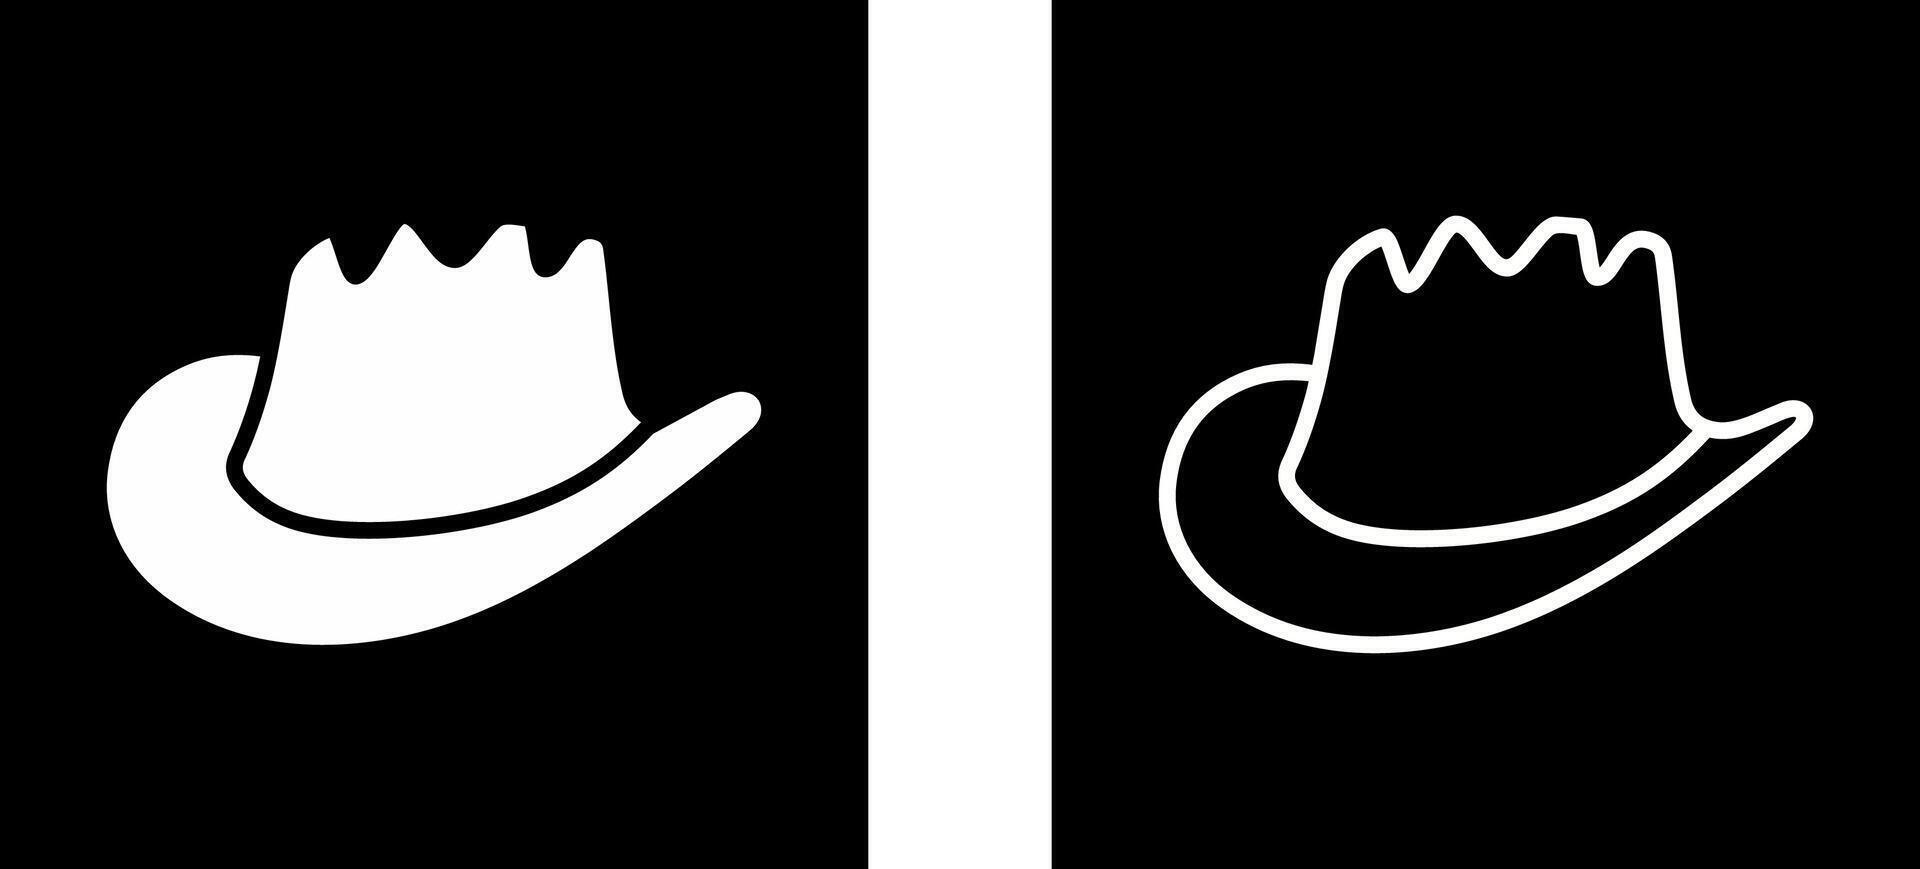 cowboy hatt vektor ikon